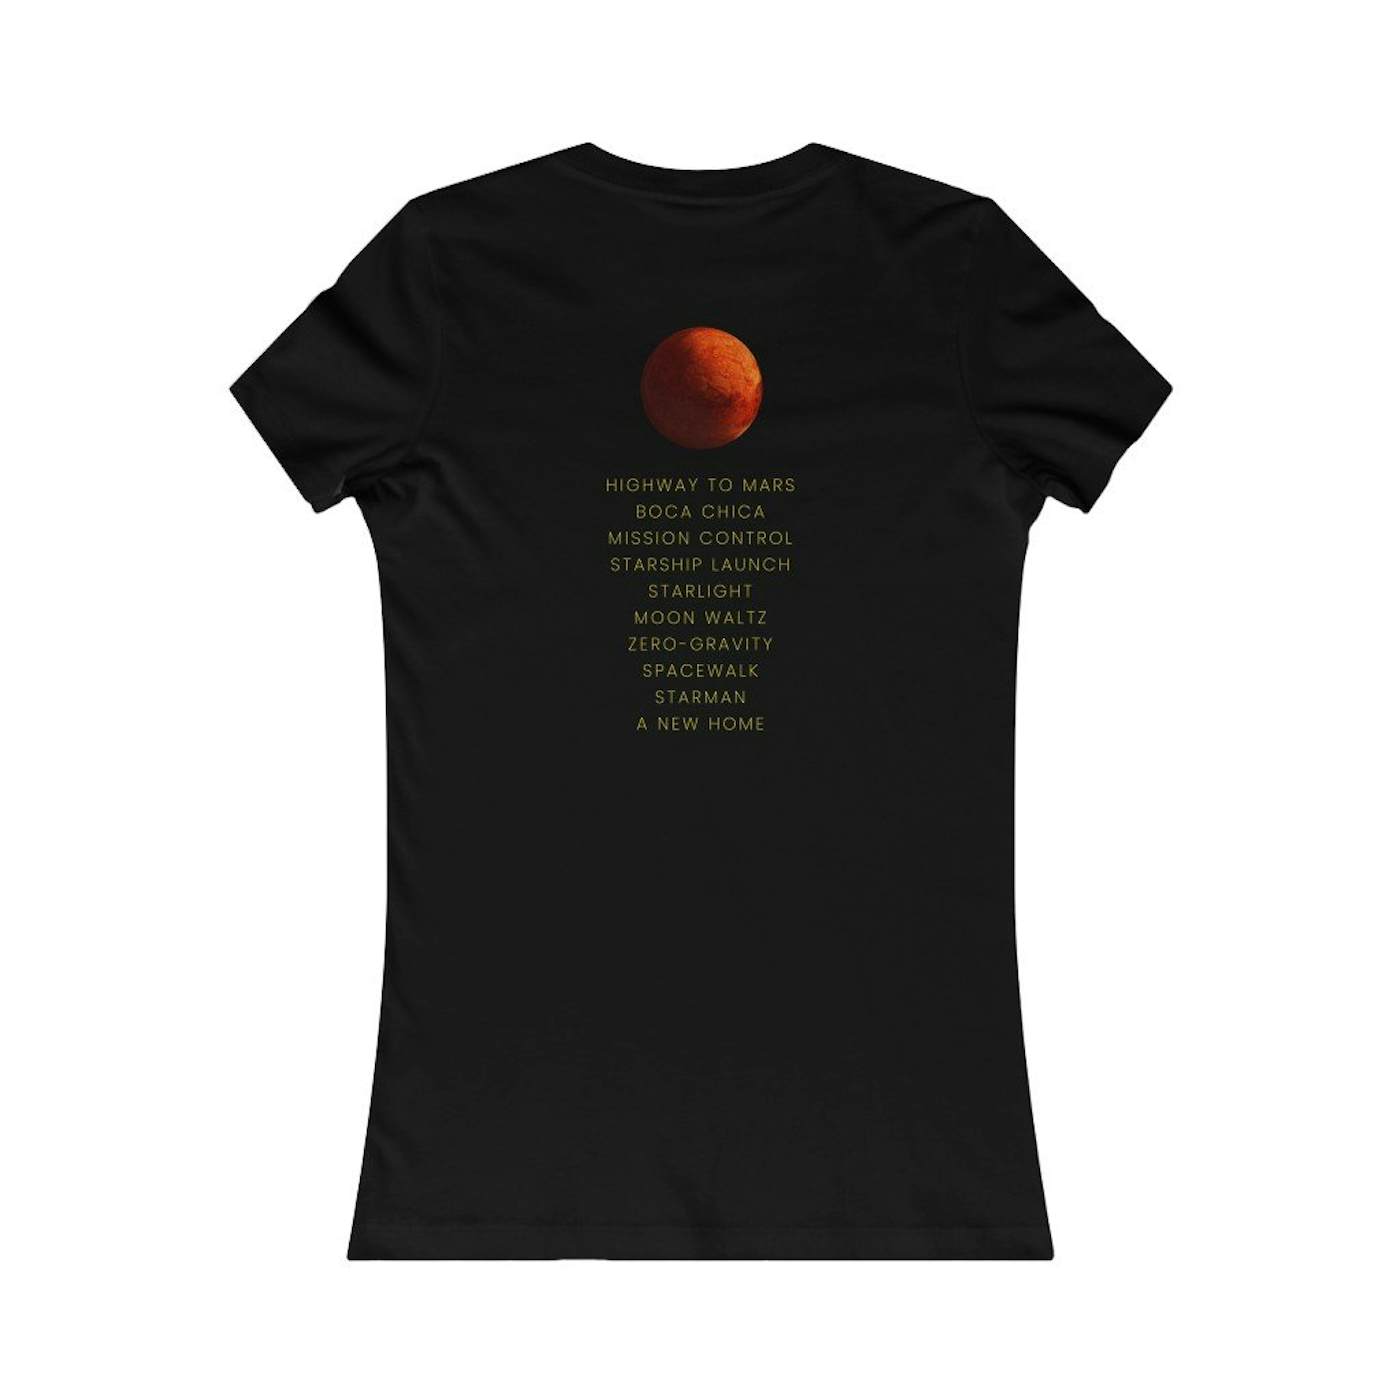 Joe Steven Women’s Starman T-Shirt